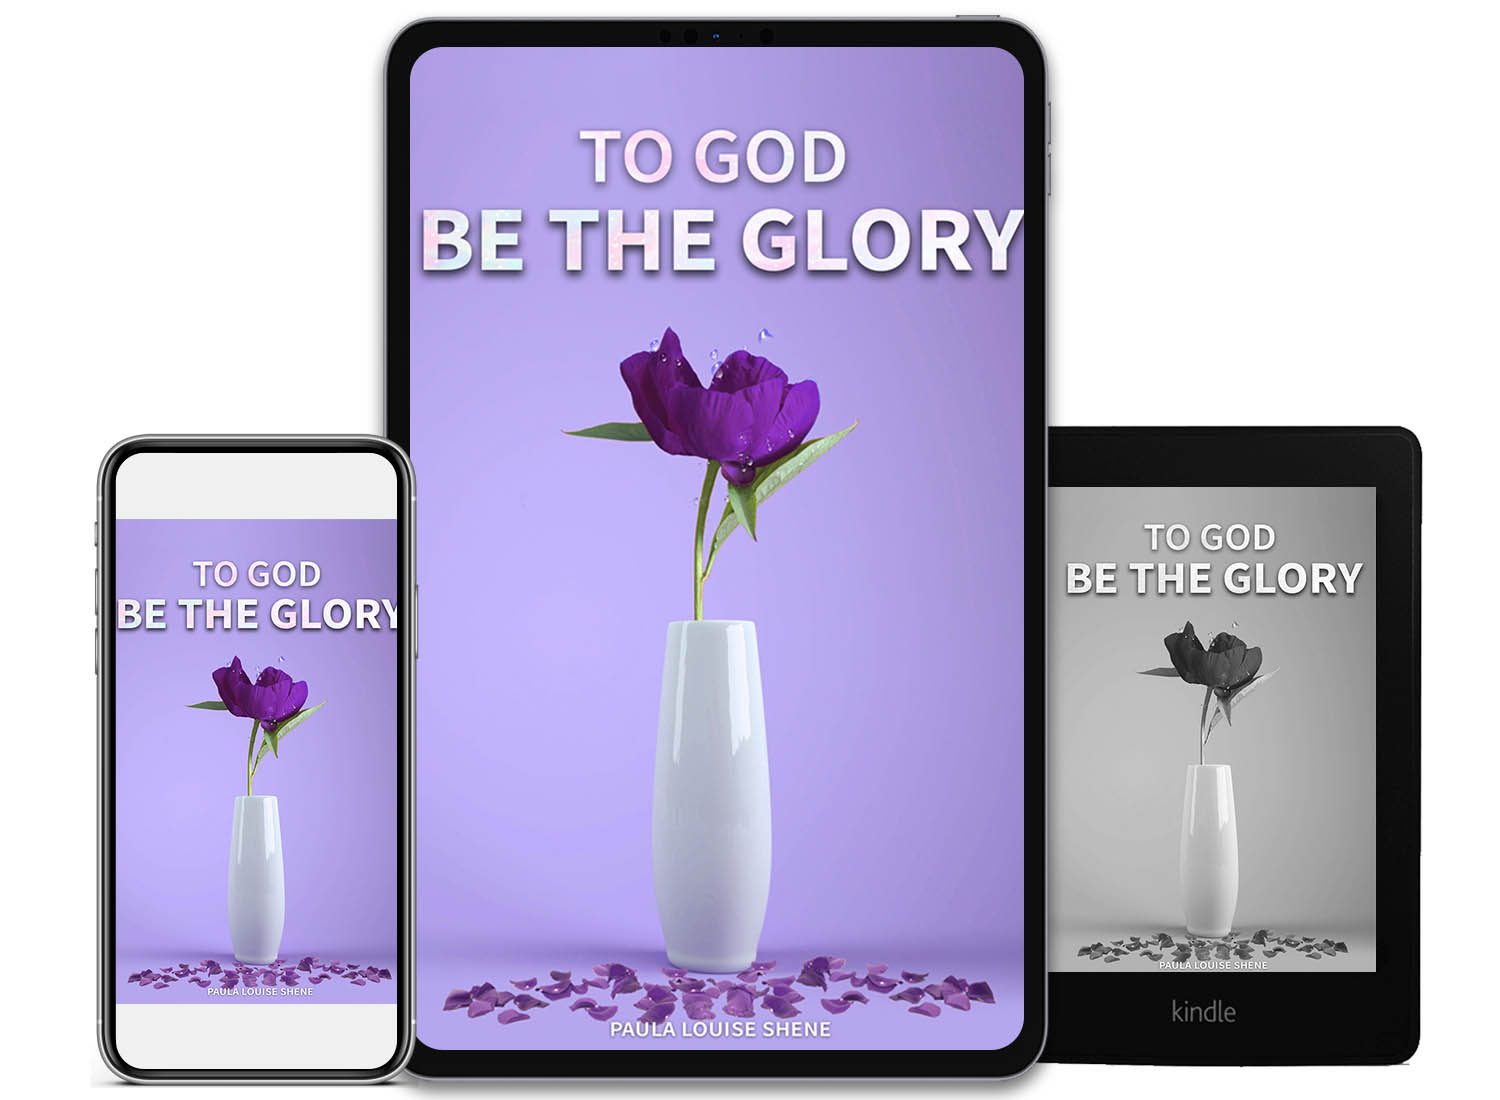 mrismailben-portfolio-To-god-be-the-glory-ebookcoverdesign-